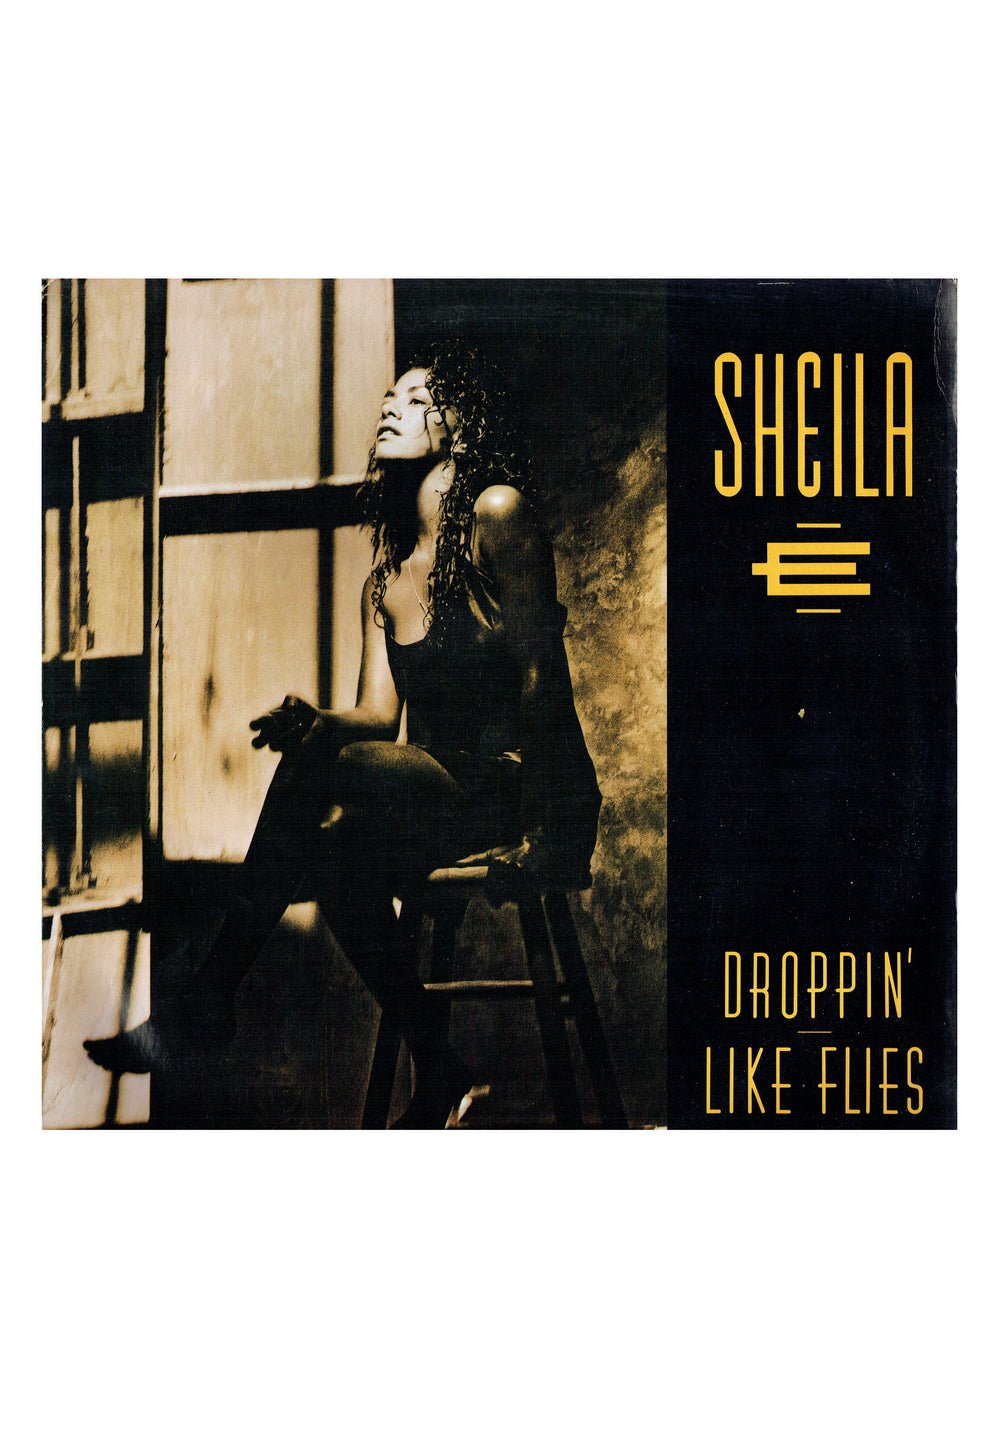 Sheila E Droppin' Like Flies 12 Inch Vinyl UK 3 Tracks  Prince